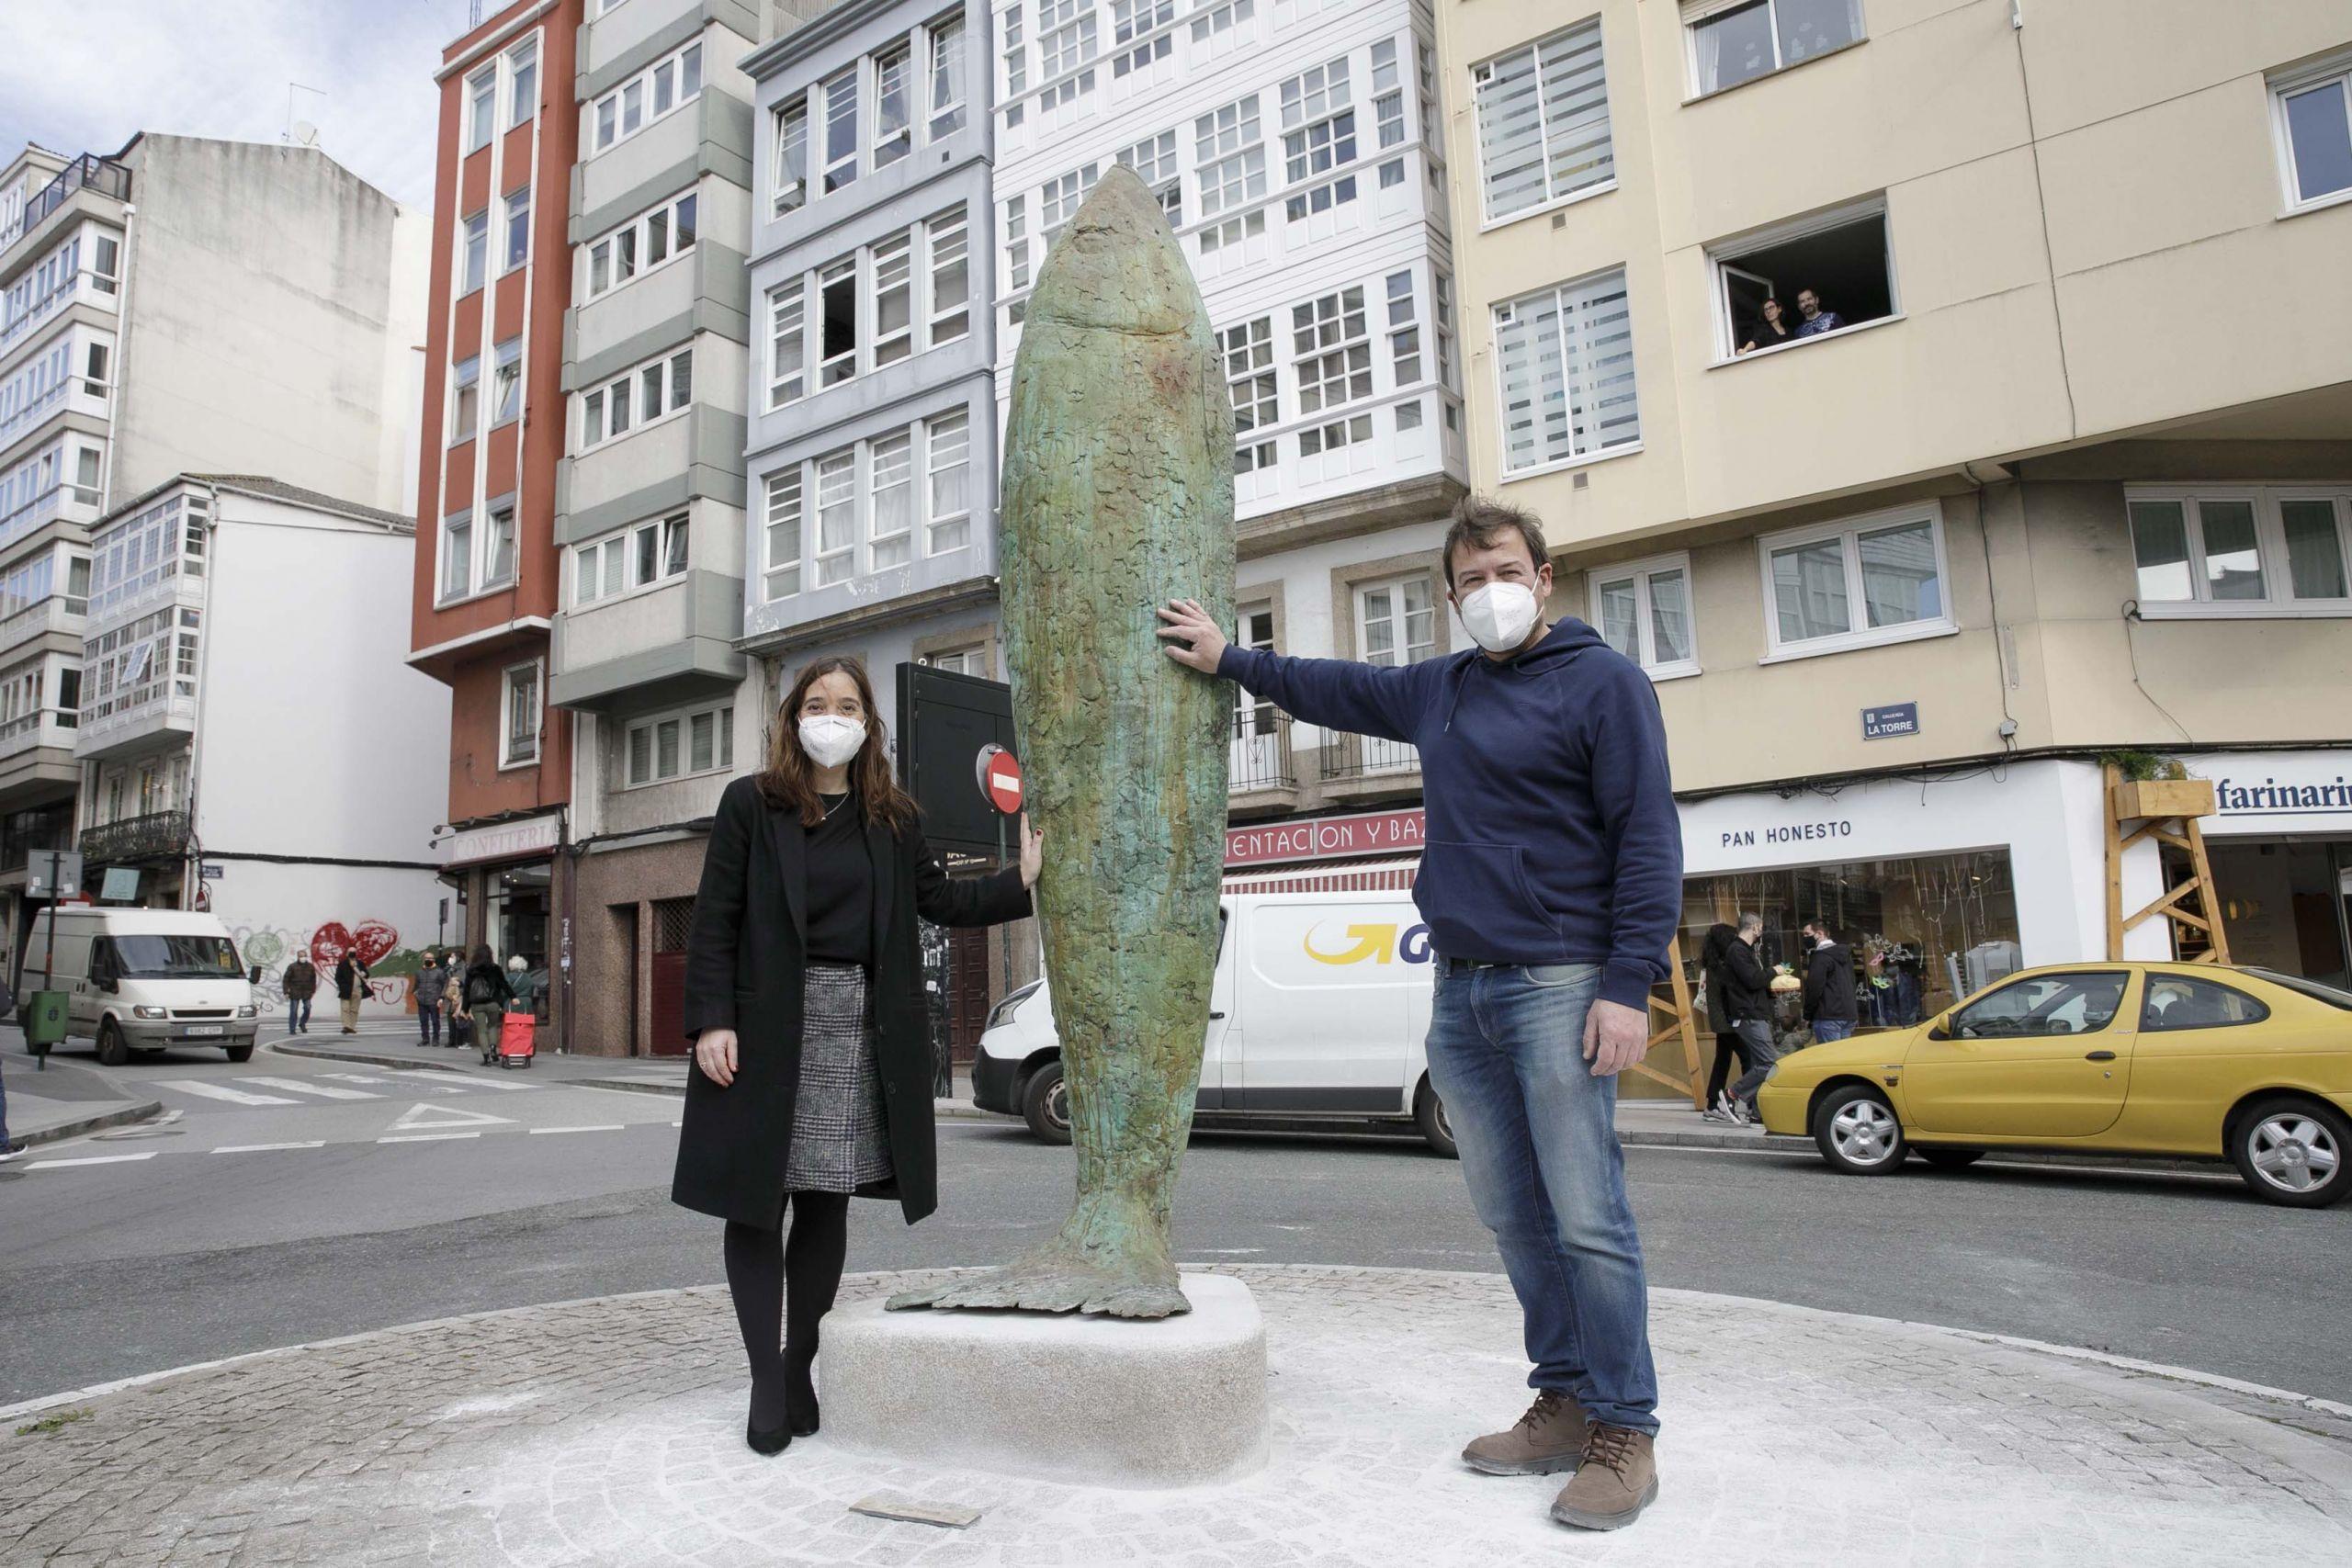 La escultura de la sardina (Concello da Coruña).